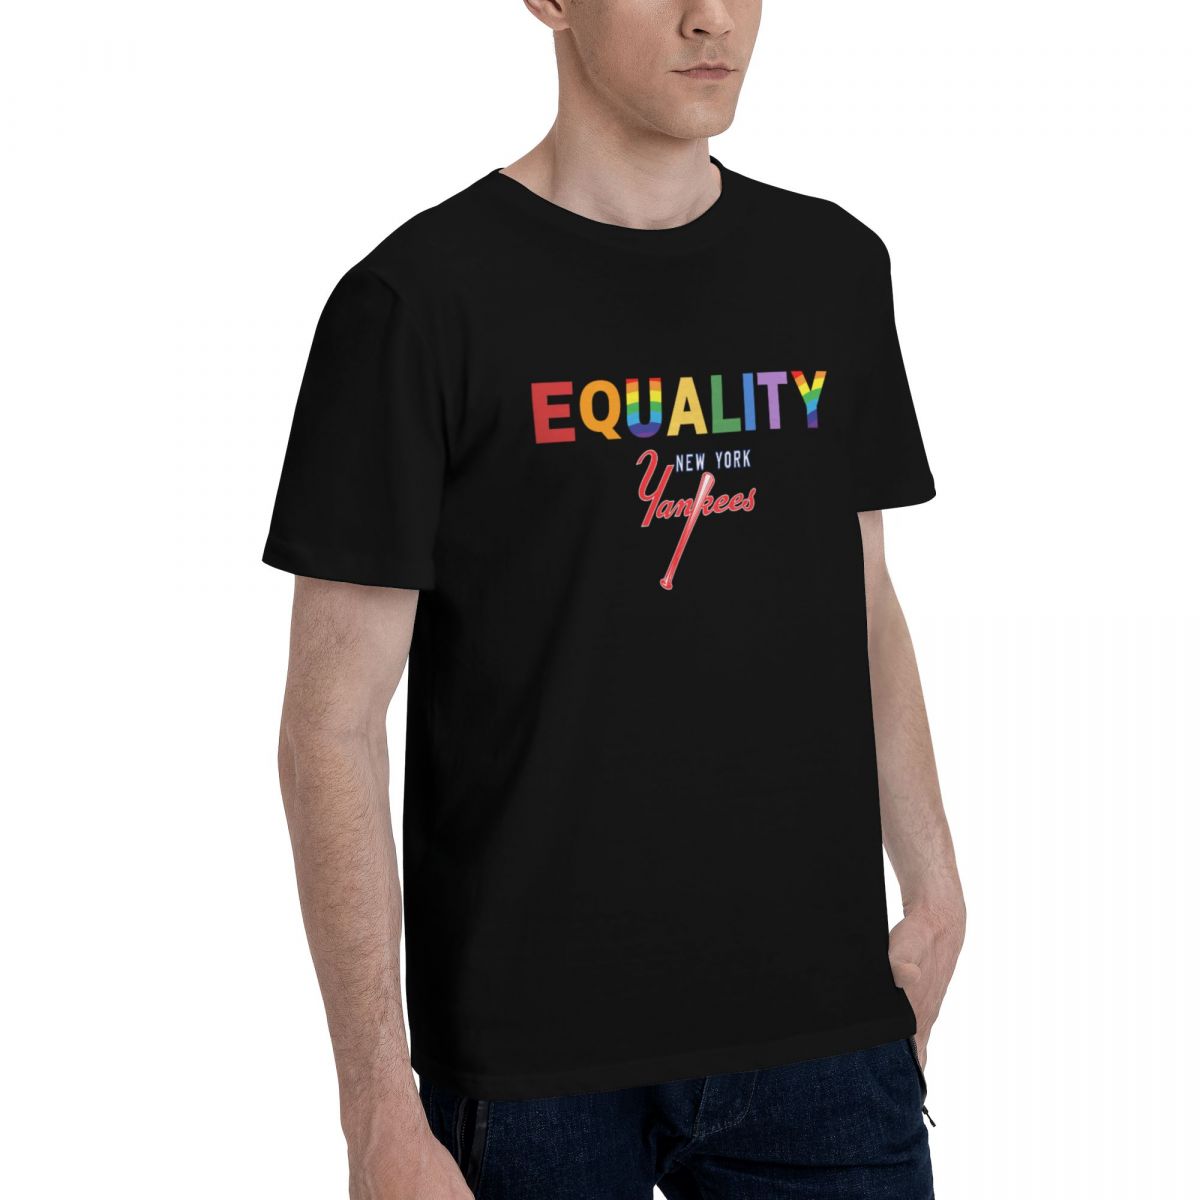 New York Yankees Rainbow Equality Pride Cotton T-Shirt Men's